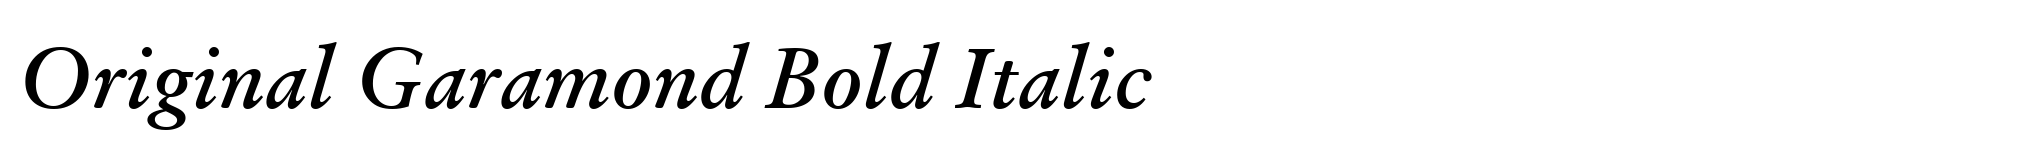 Original Garamond Bold Italic image